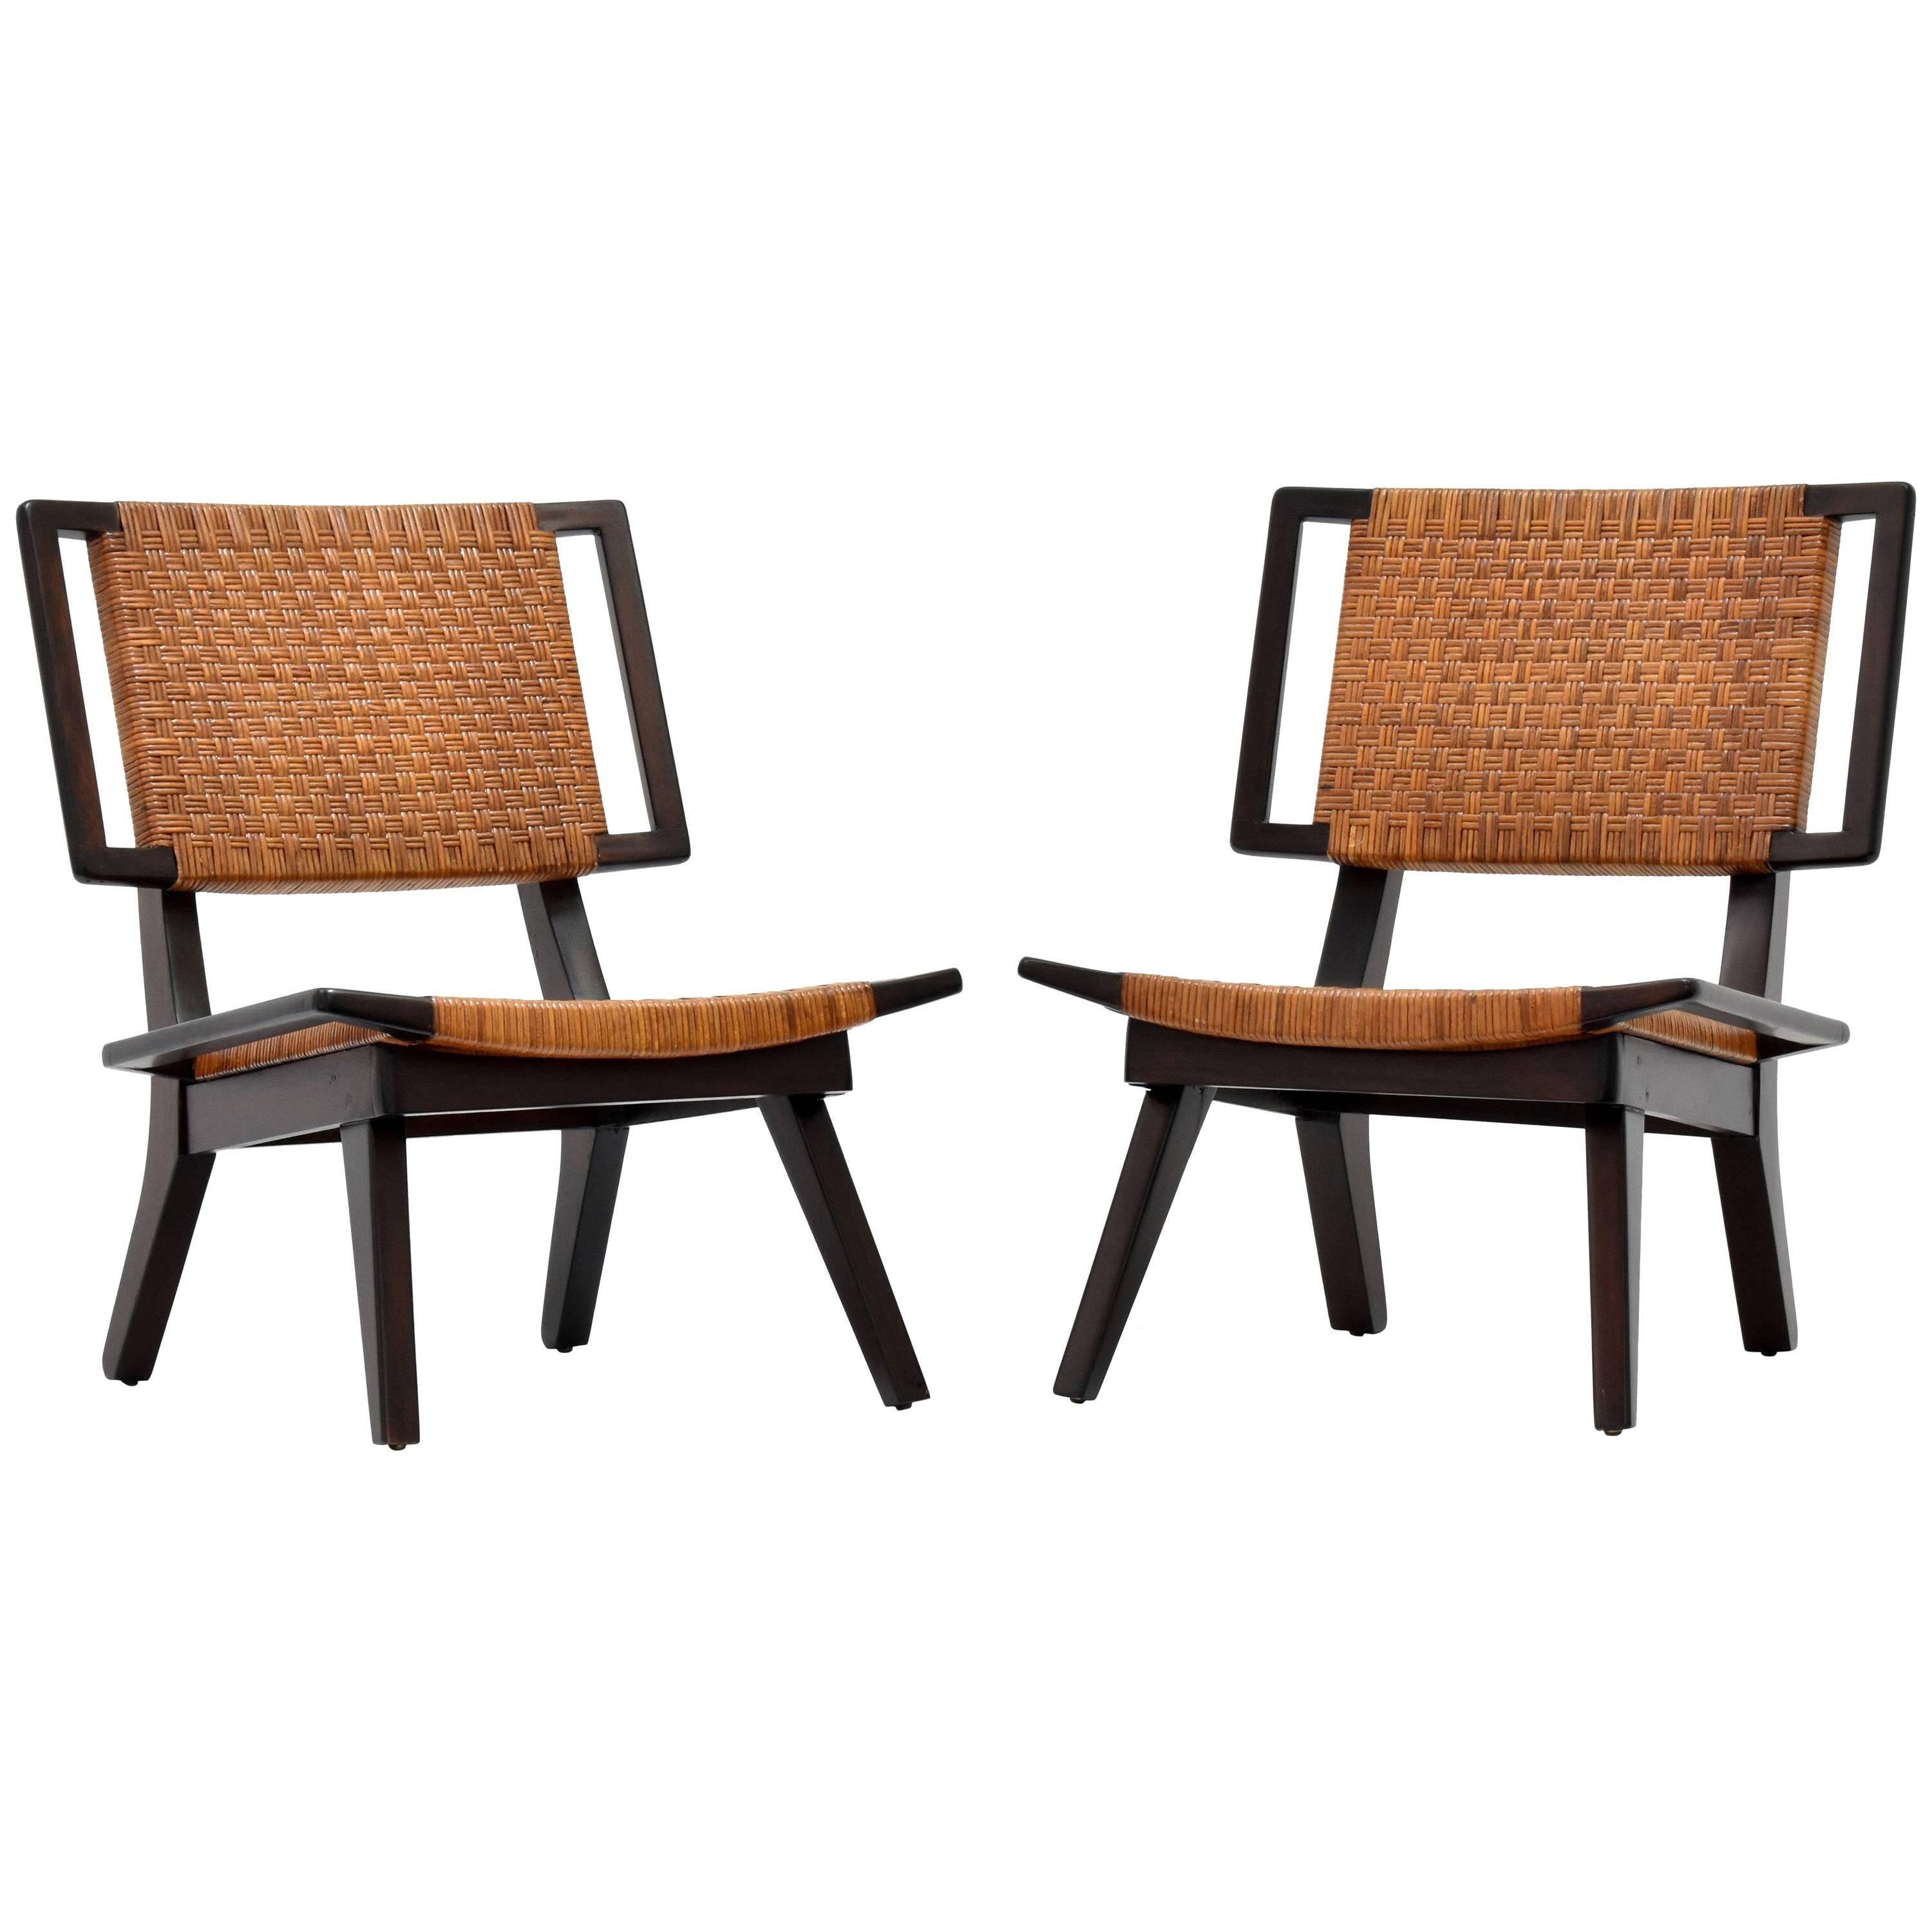 Paul László Style Lounge Chairs, Woven Rattan, Dark Wood, California 1950s